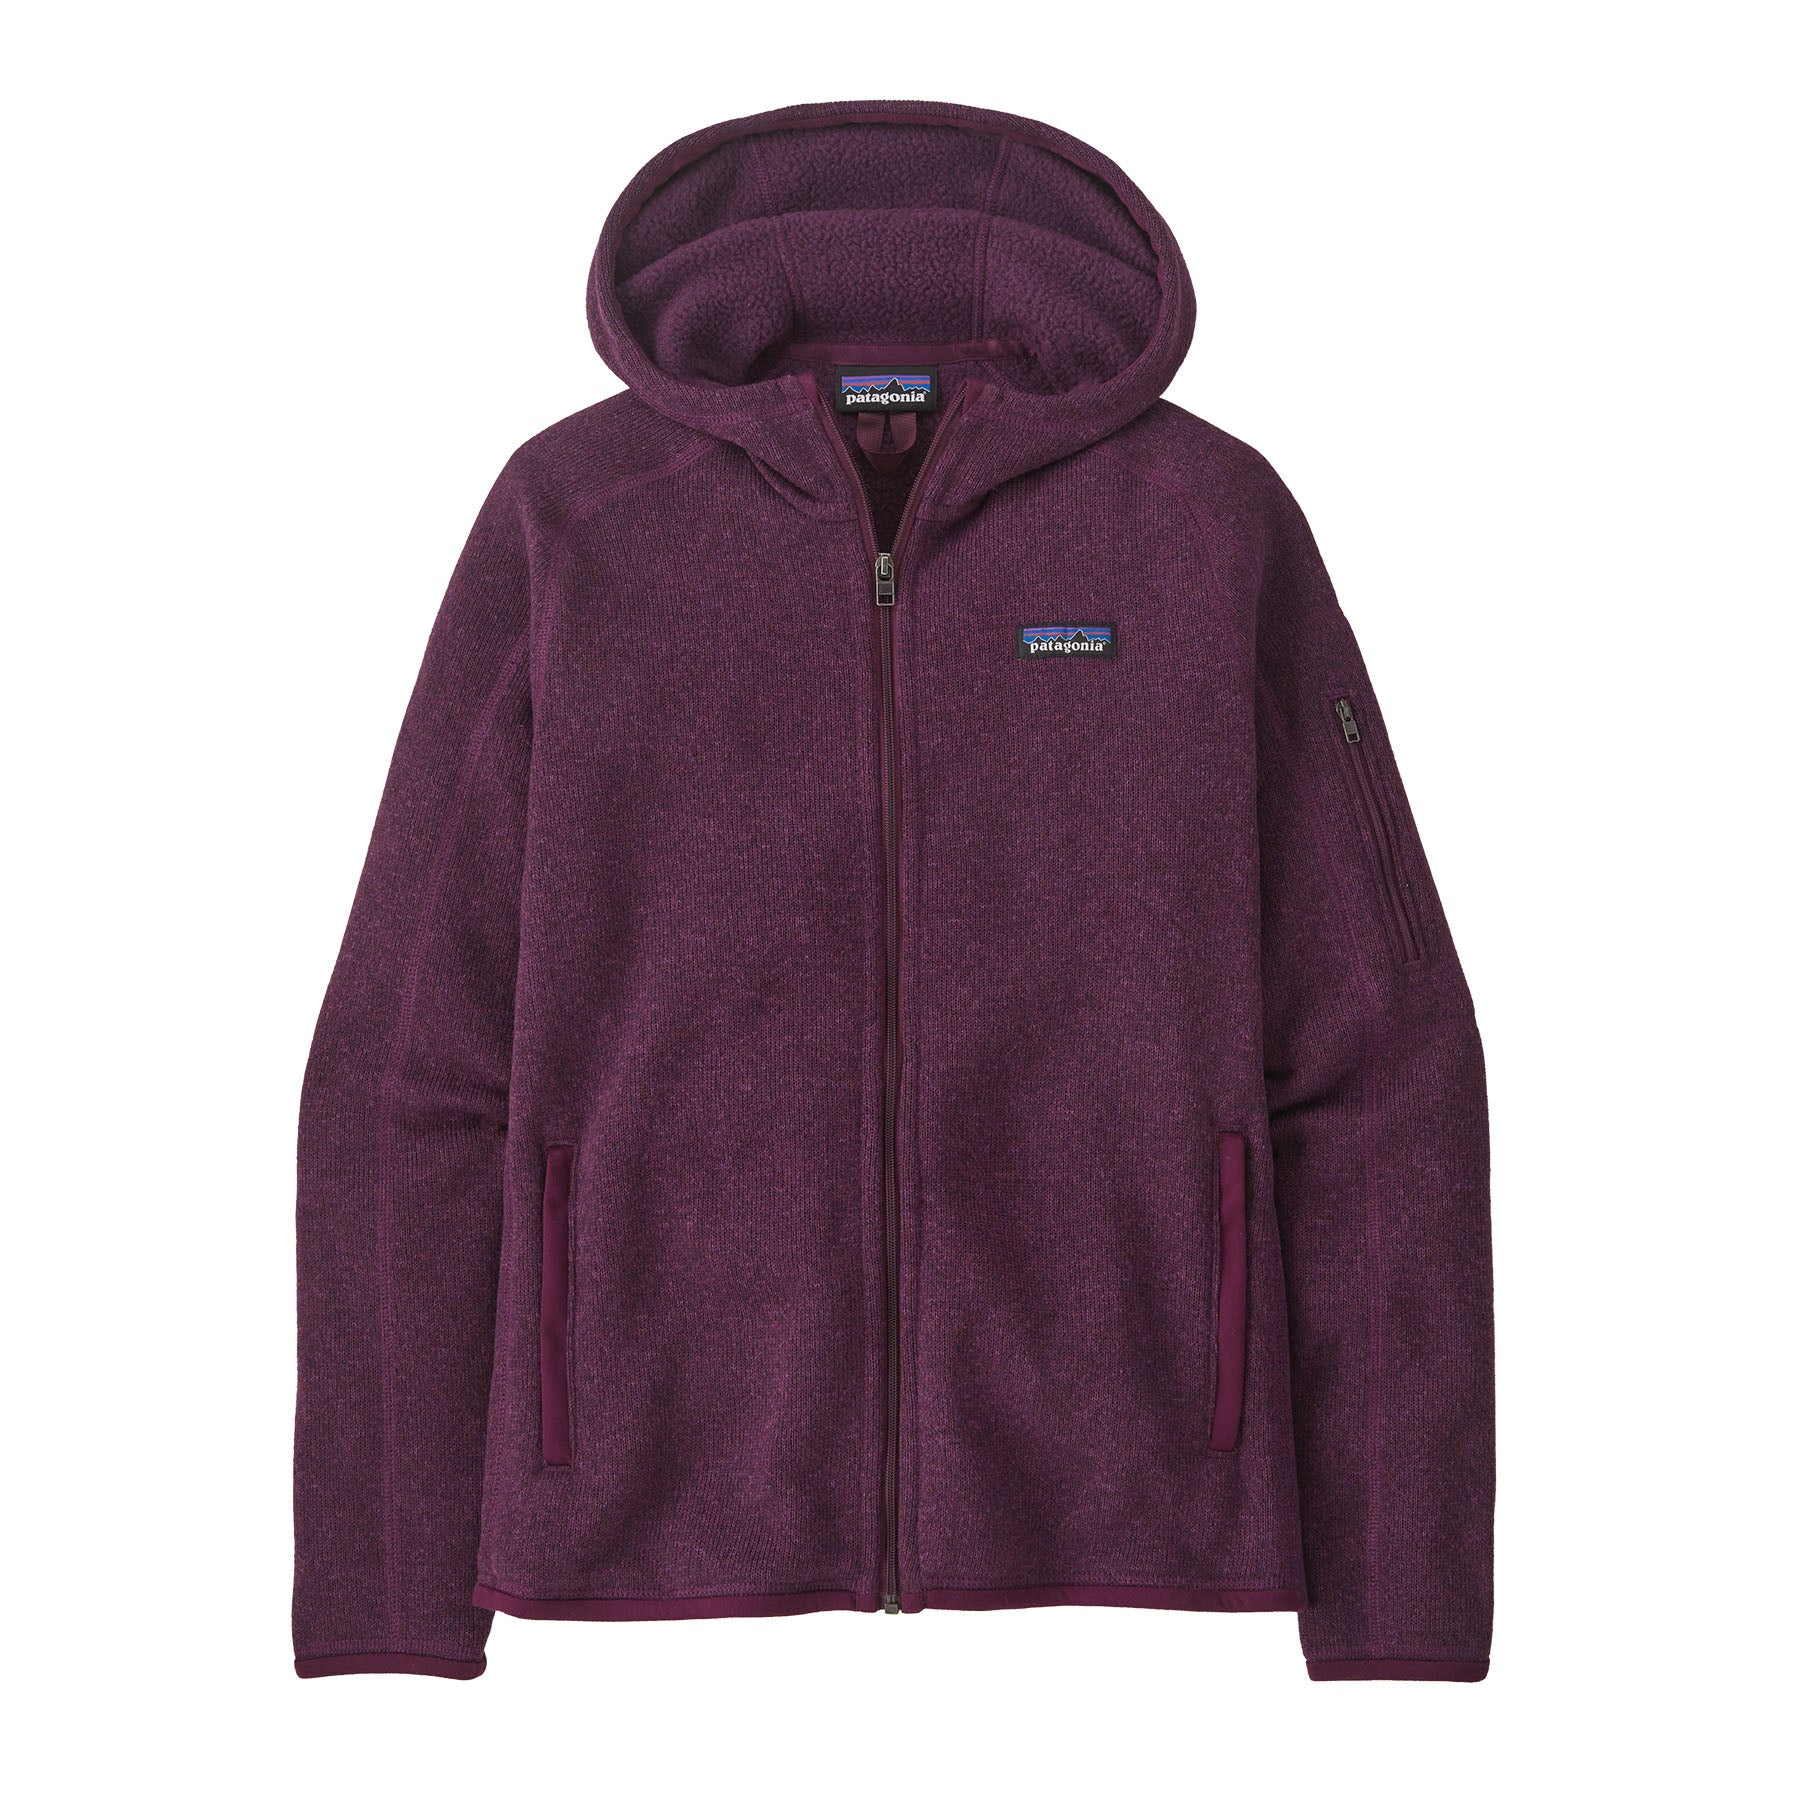 Patagonia - Women's Better Sweater® Fleece Jacket - Pelican Size